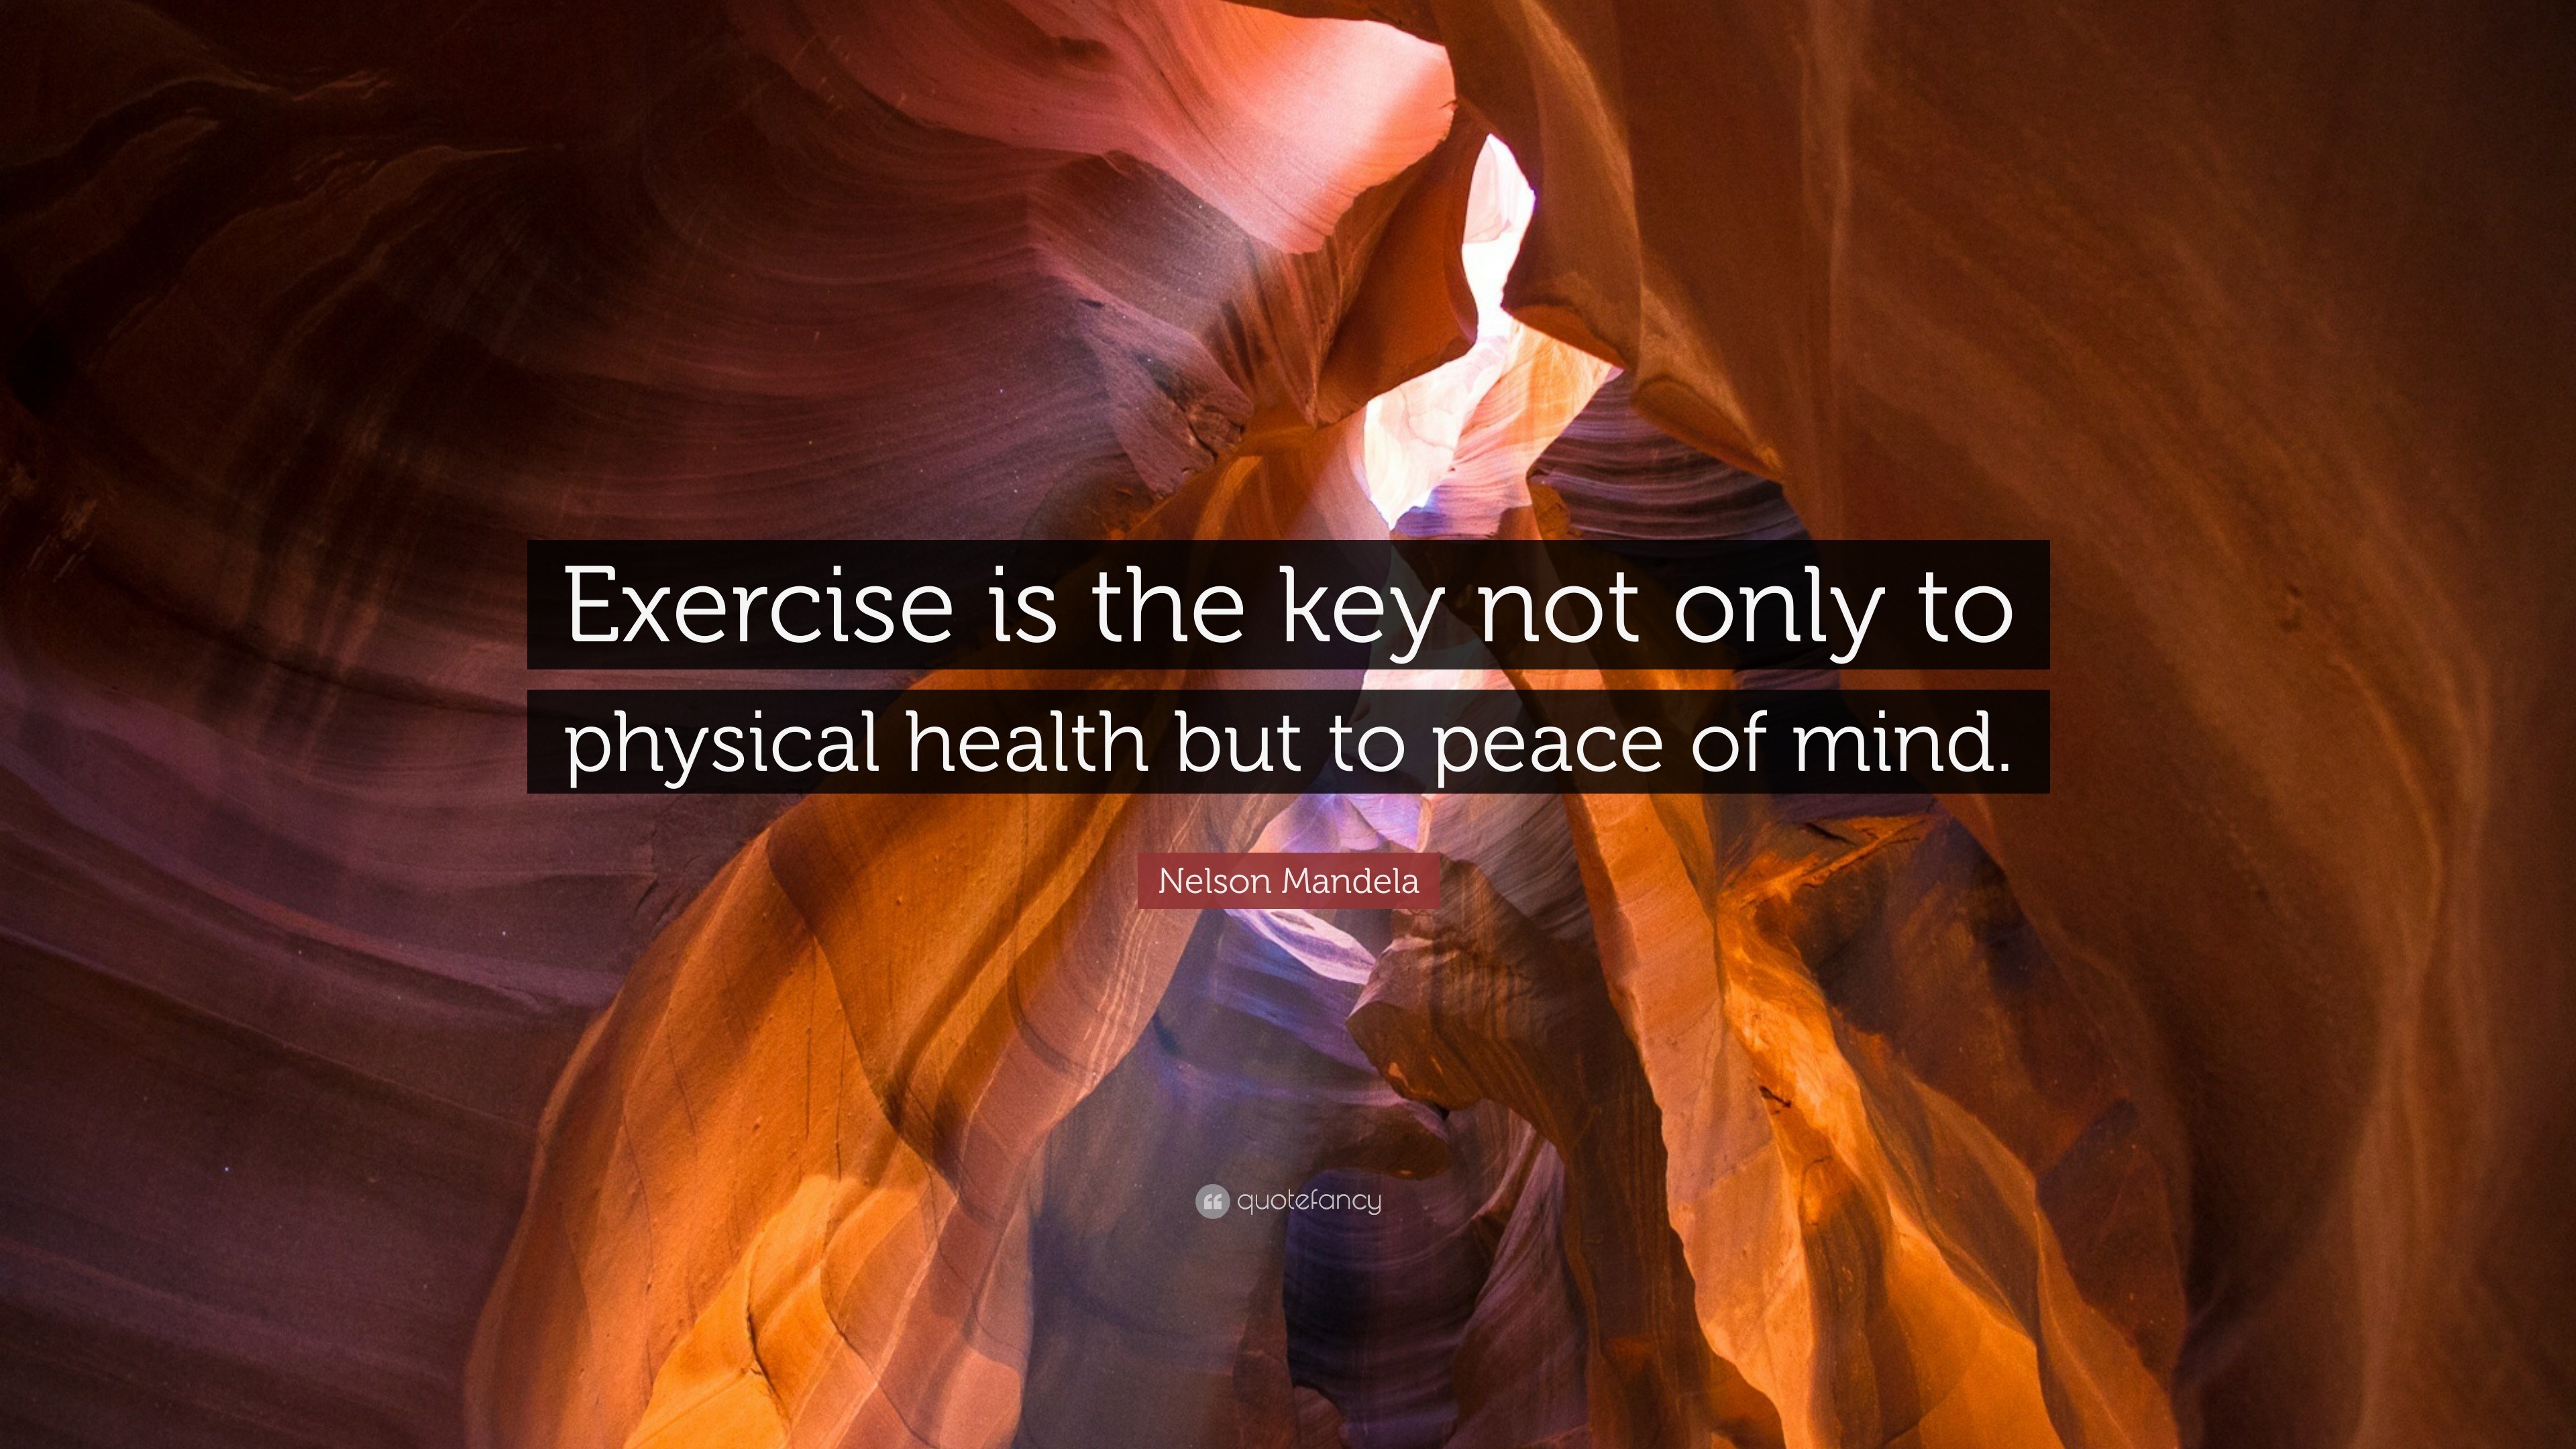 Health & Fitness - Peach of Mind